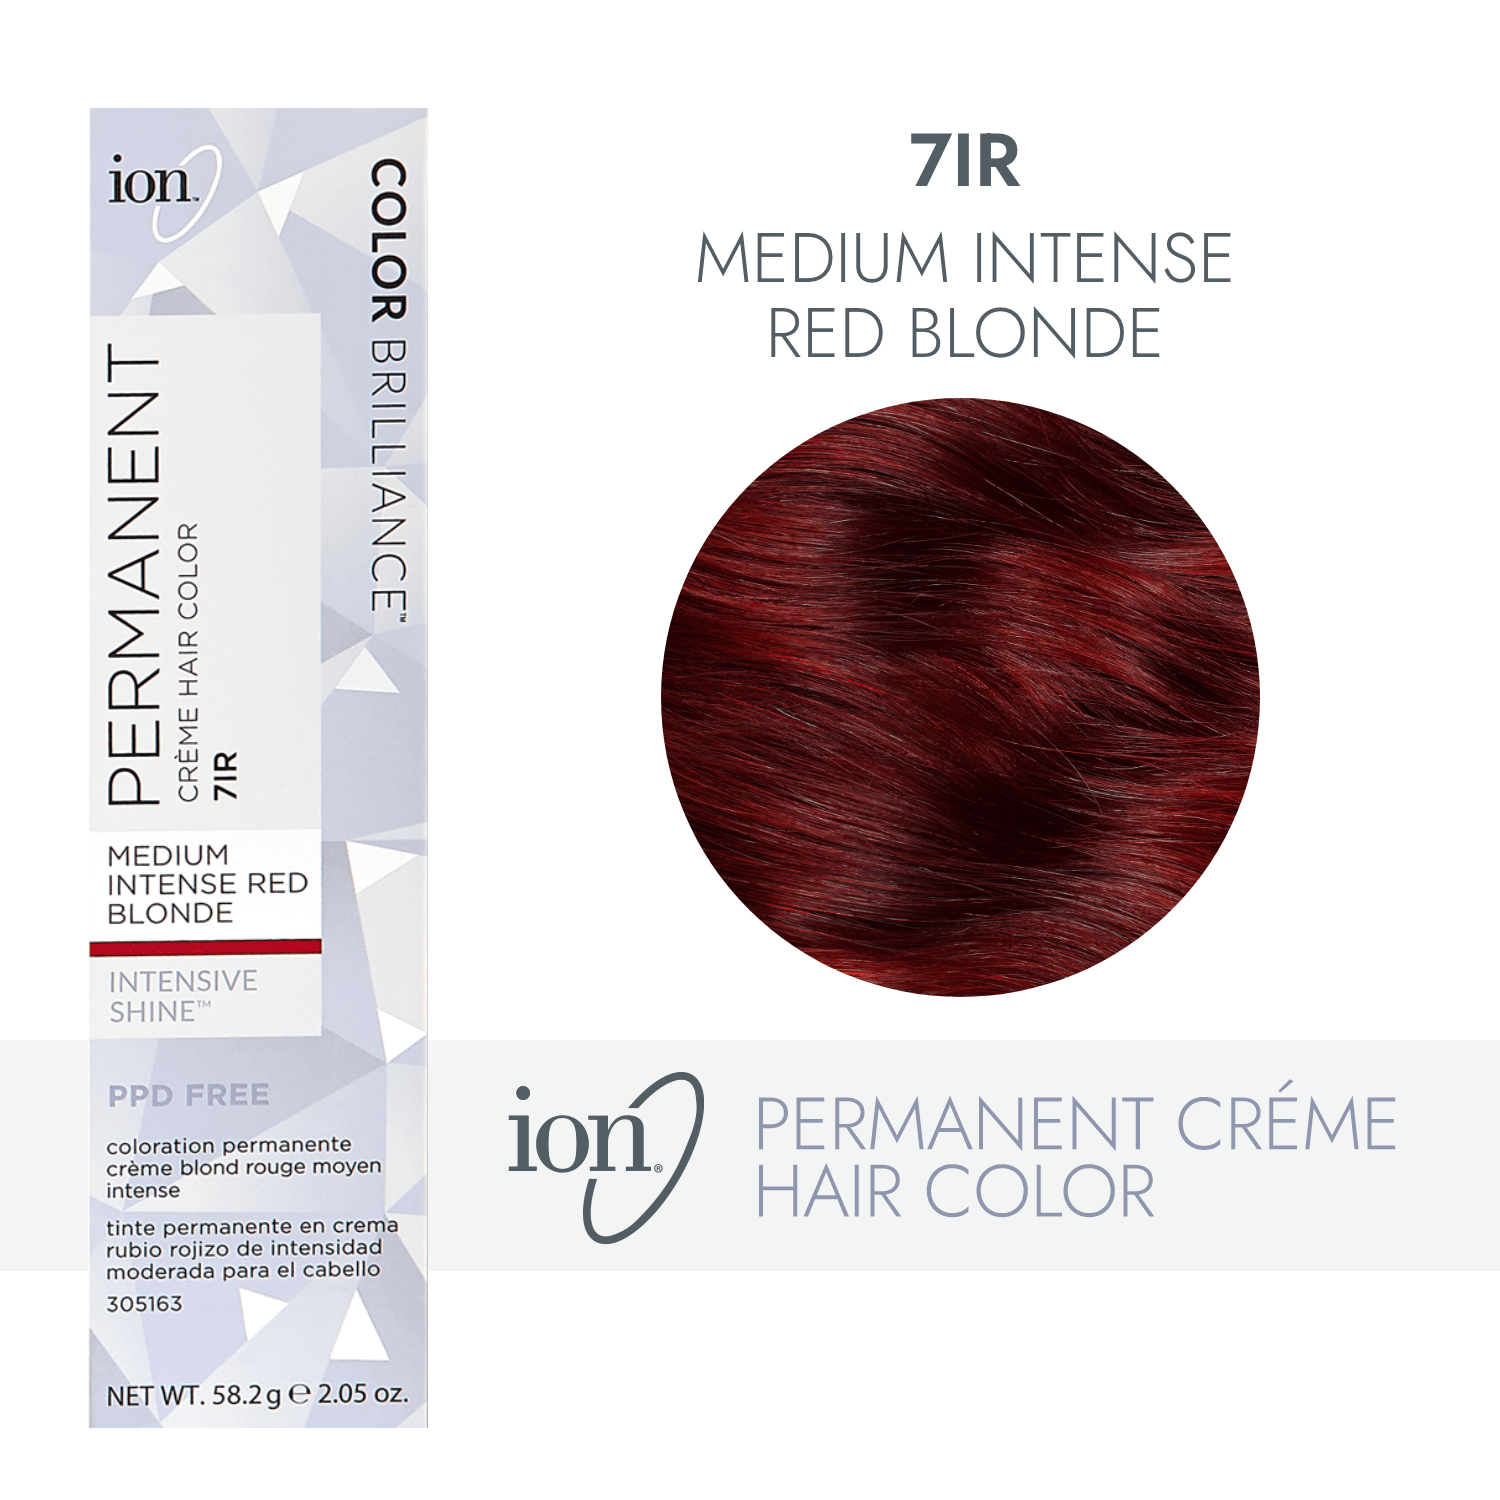 ion Color Brilliance Permanent Creme 7IR Medium Intense Red Blonde